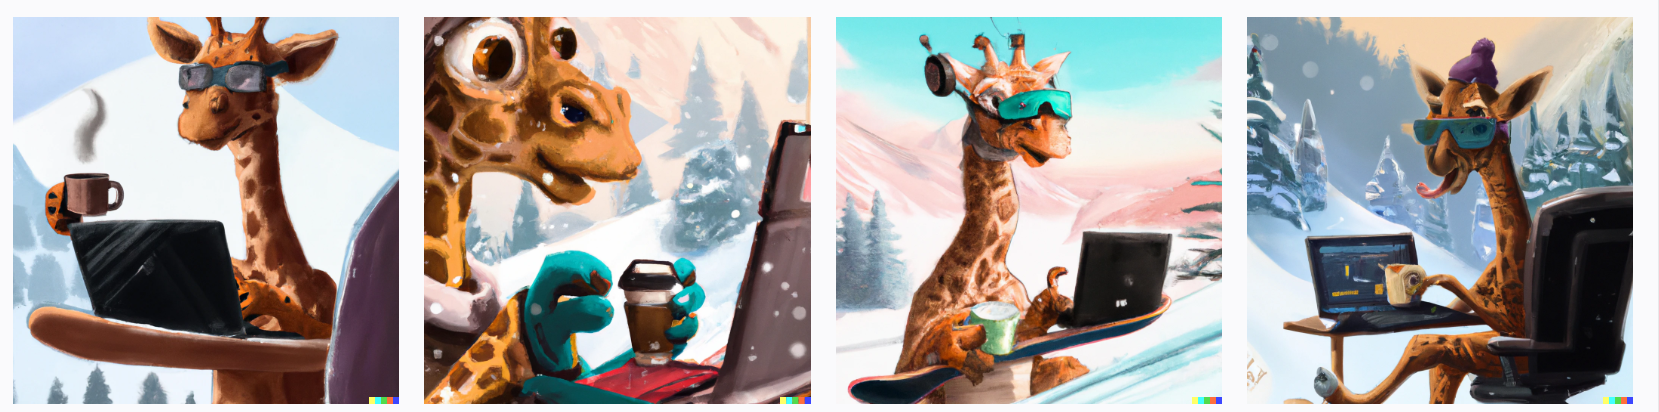 lynx snowboarding alps digital art or cute giraffe with coffee in front of laptop, digital art